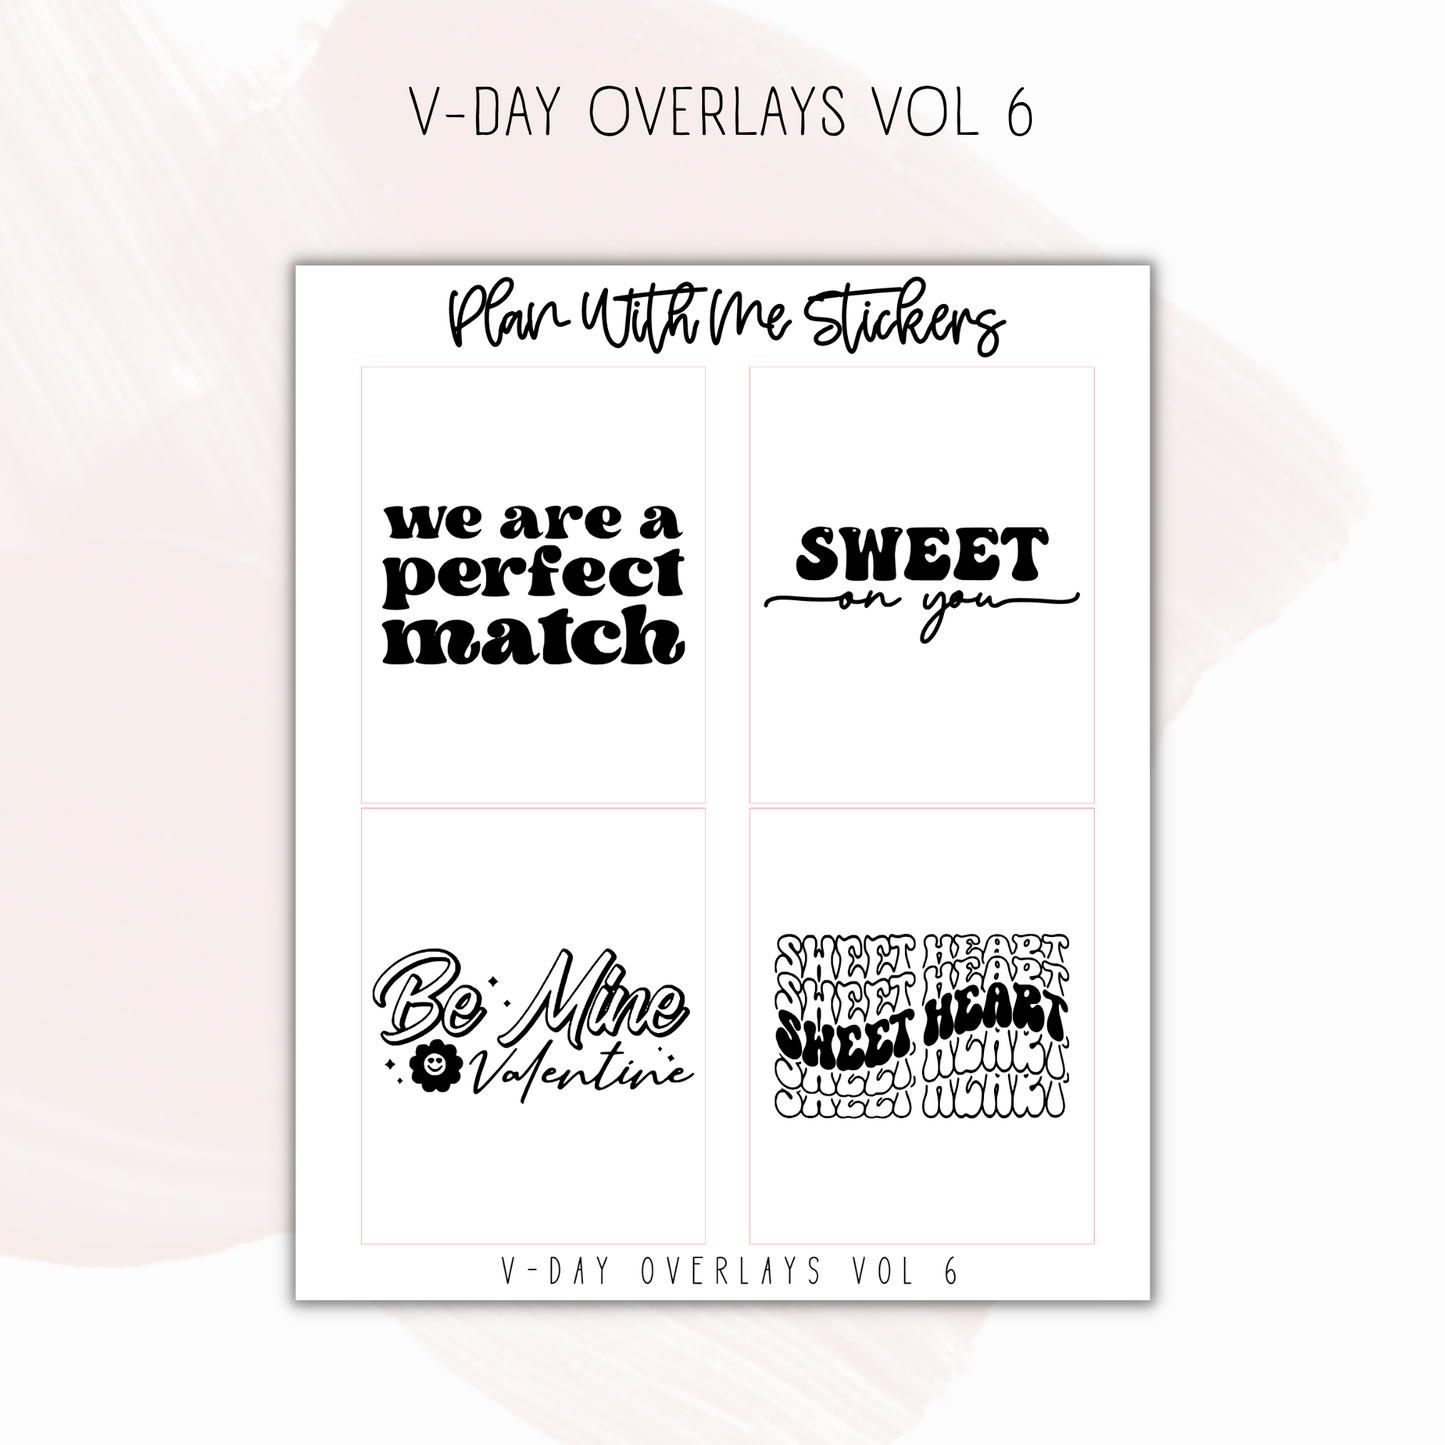 V-Day Overlays Vol 6